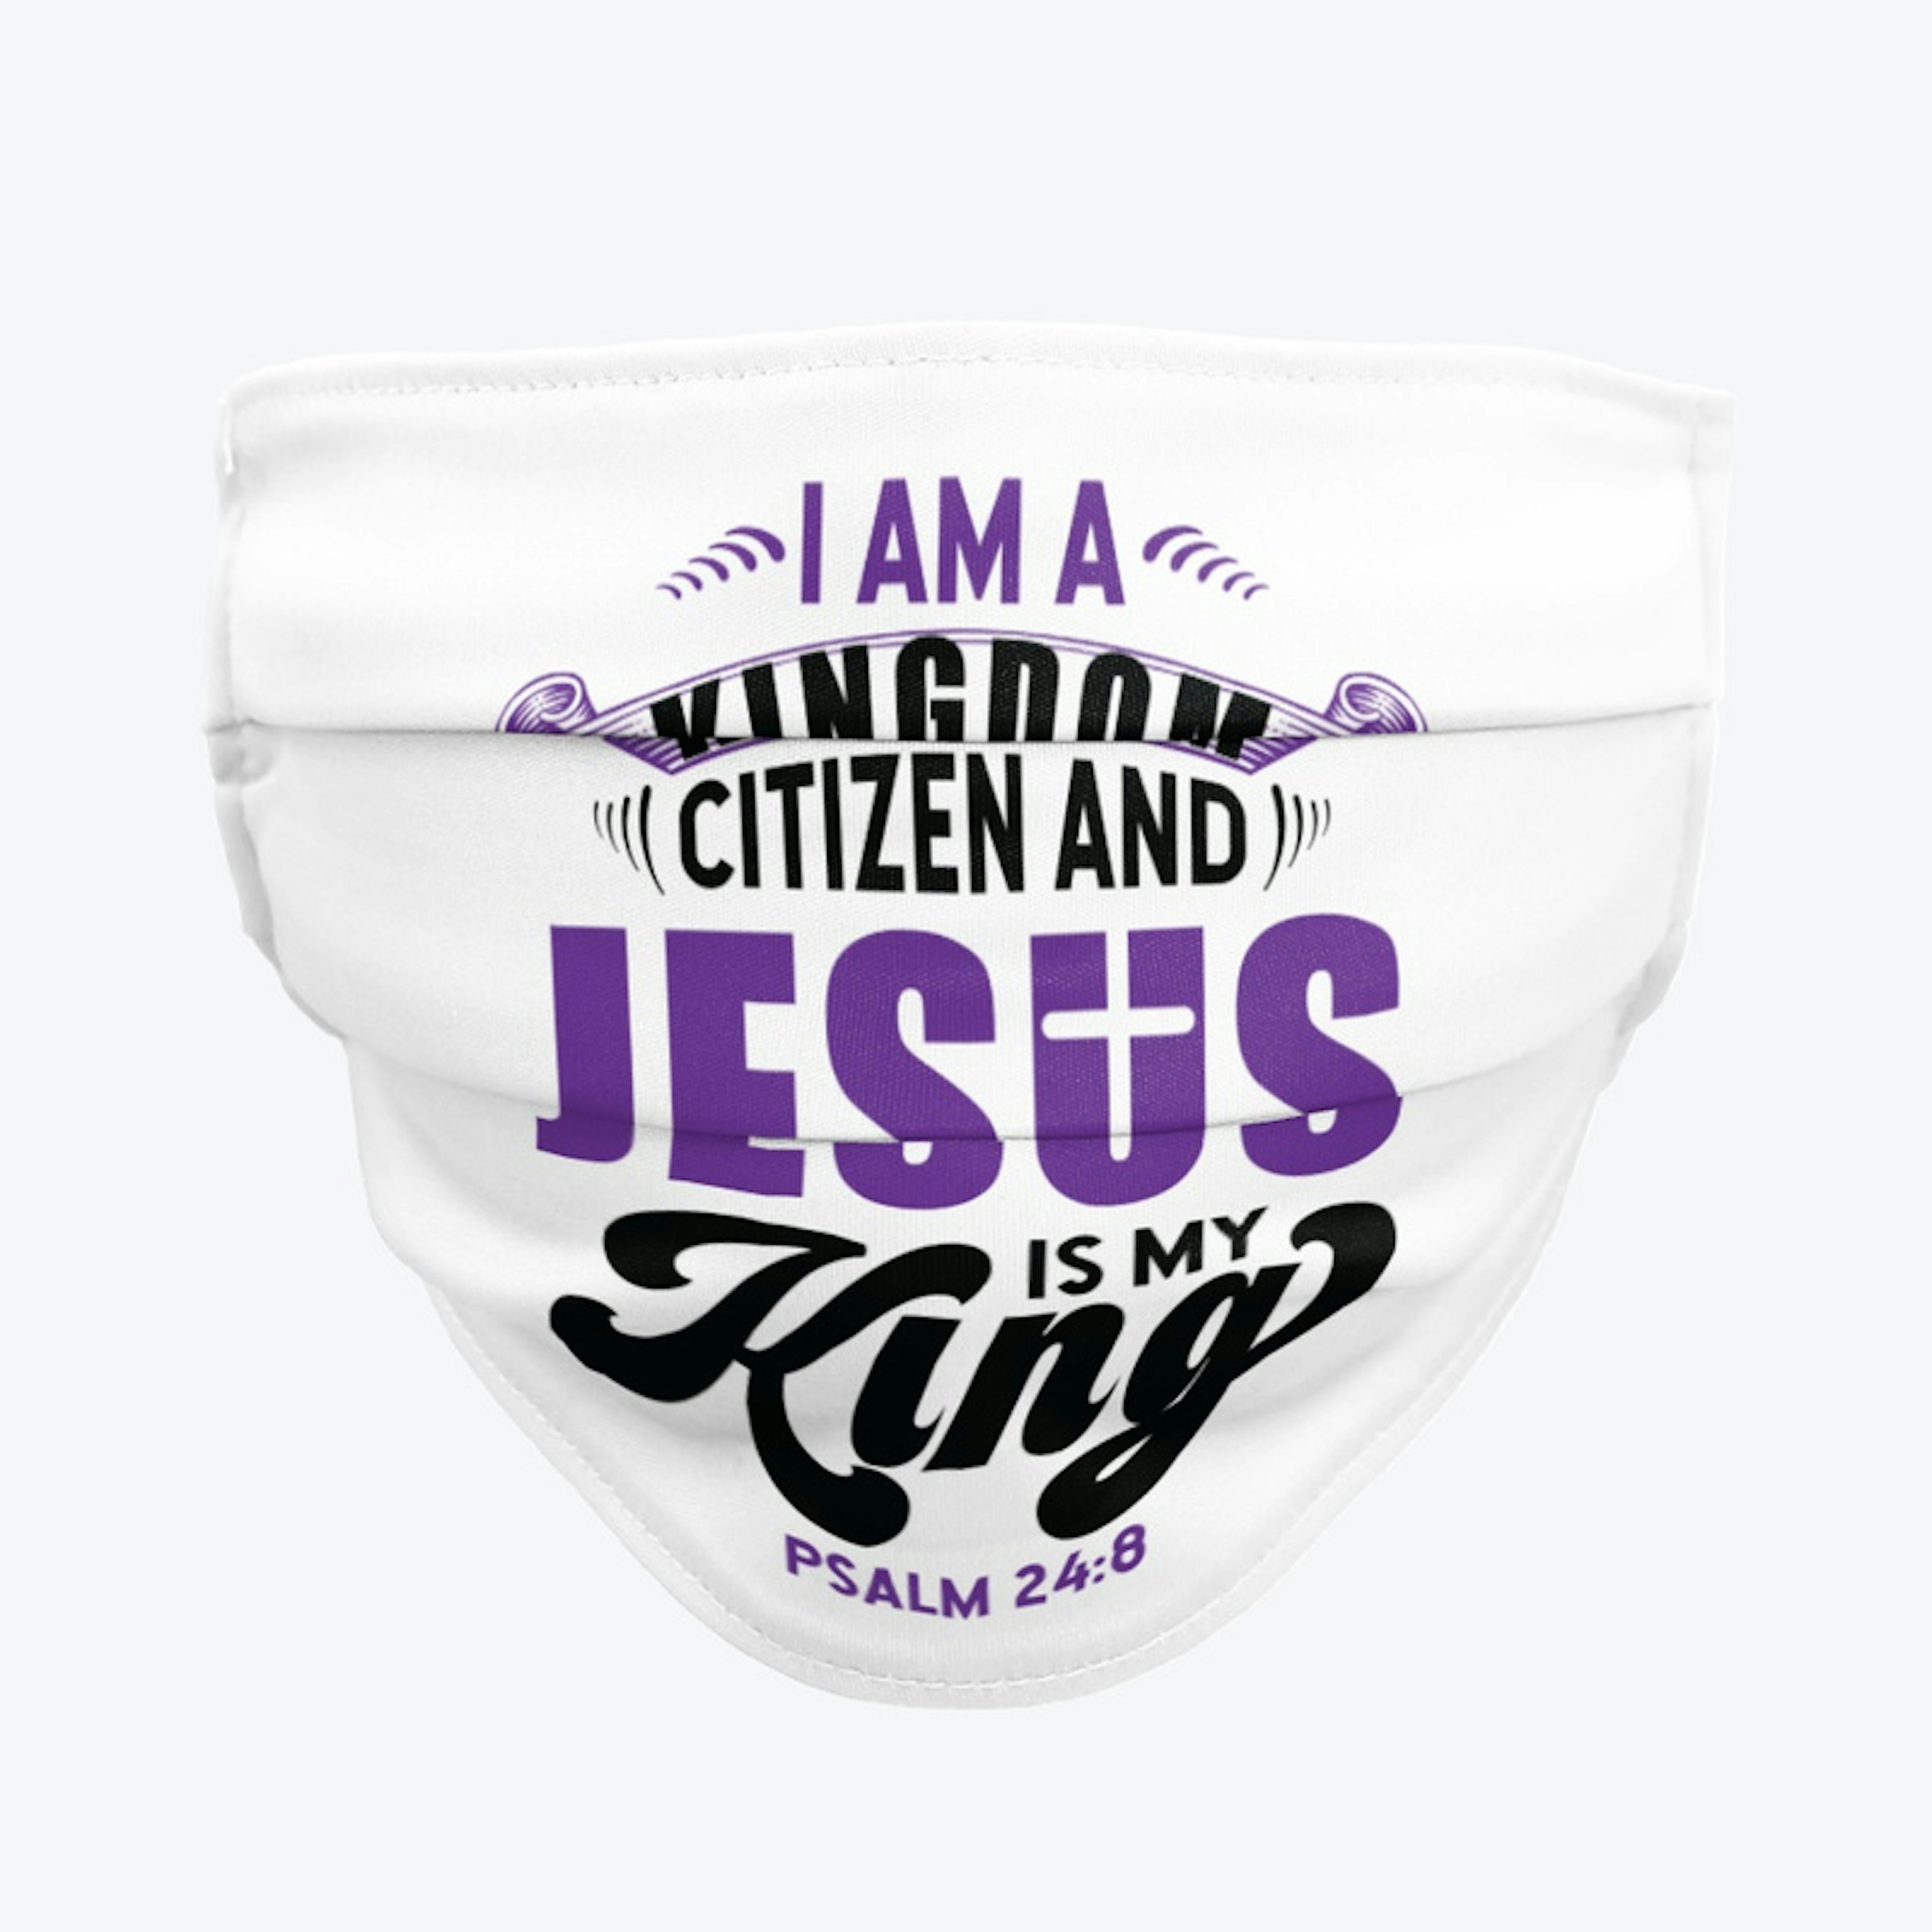 I am a kingdom citizen